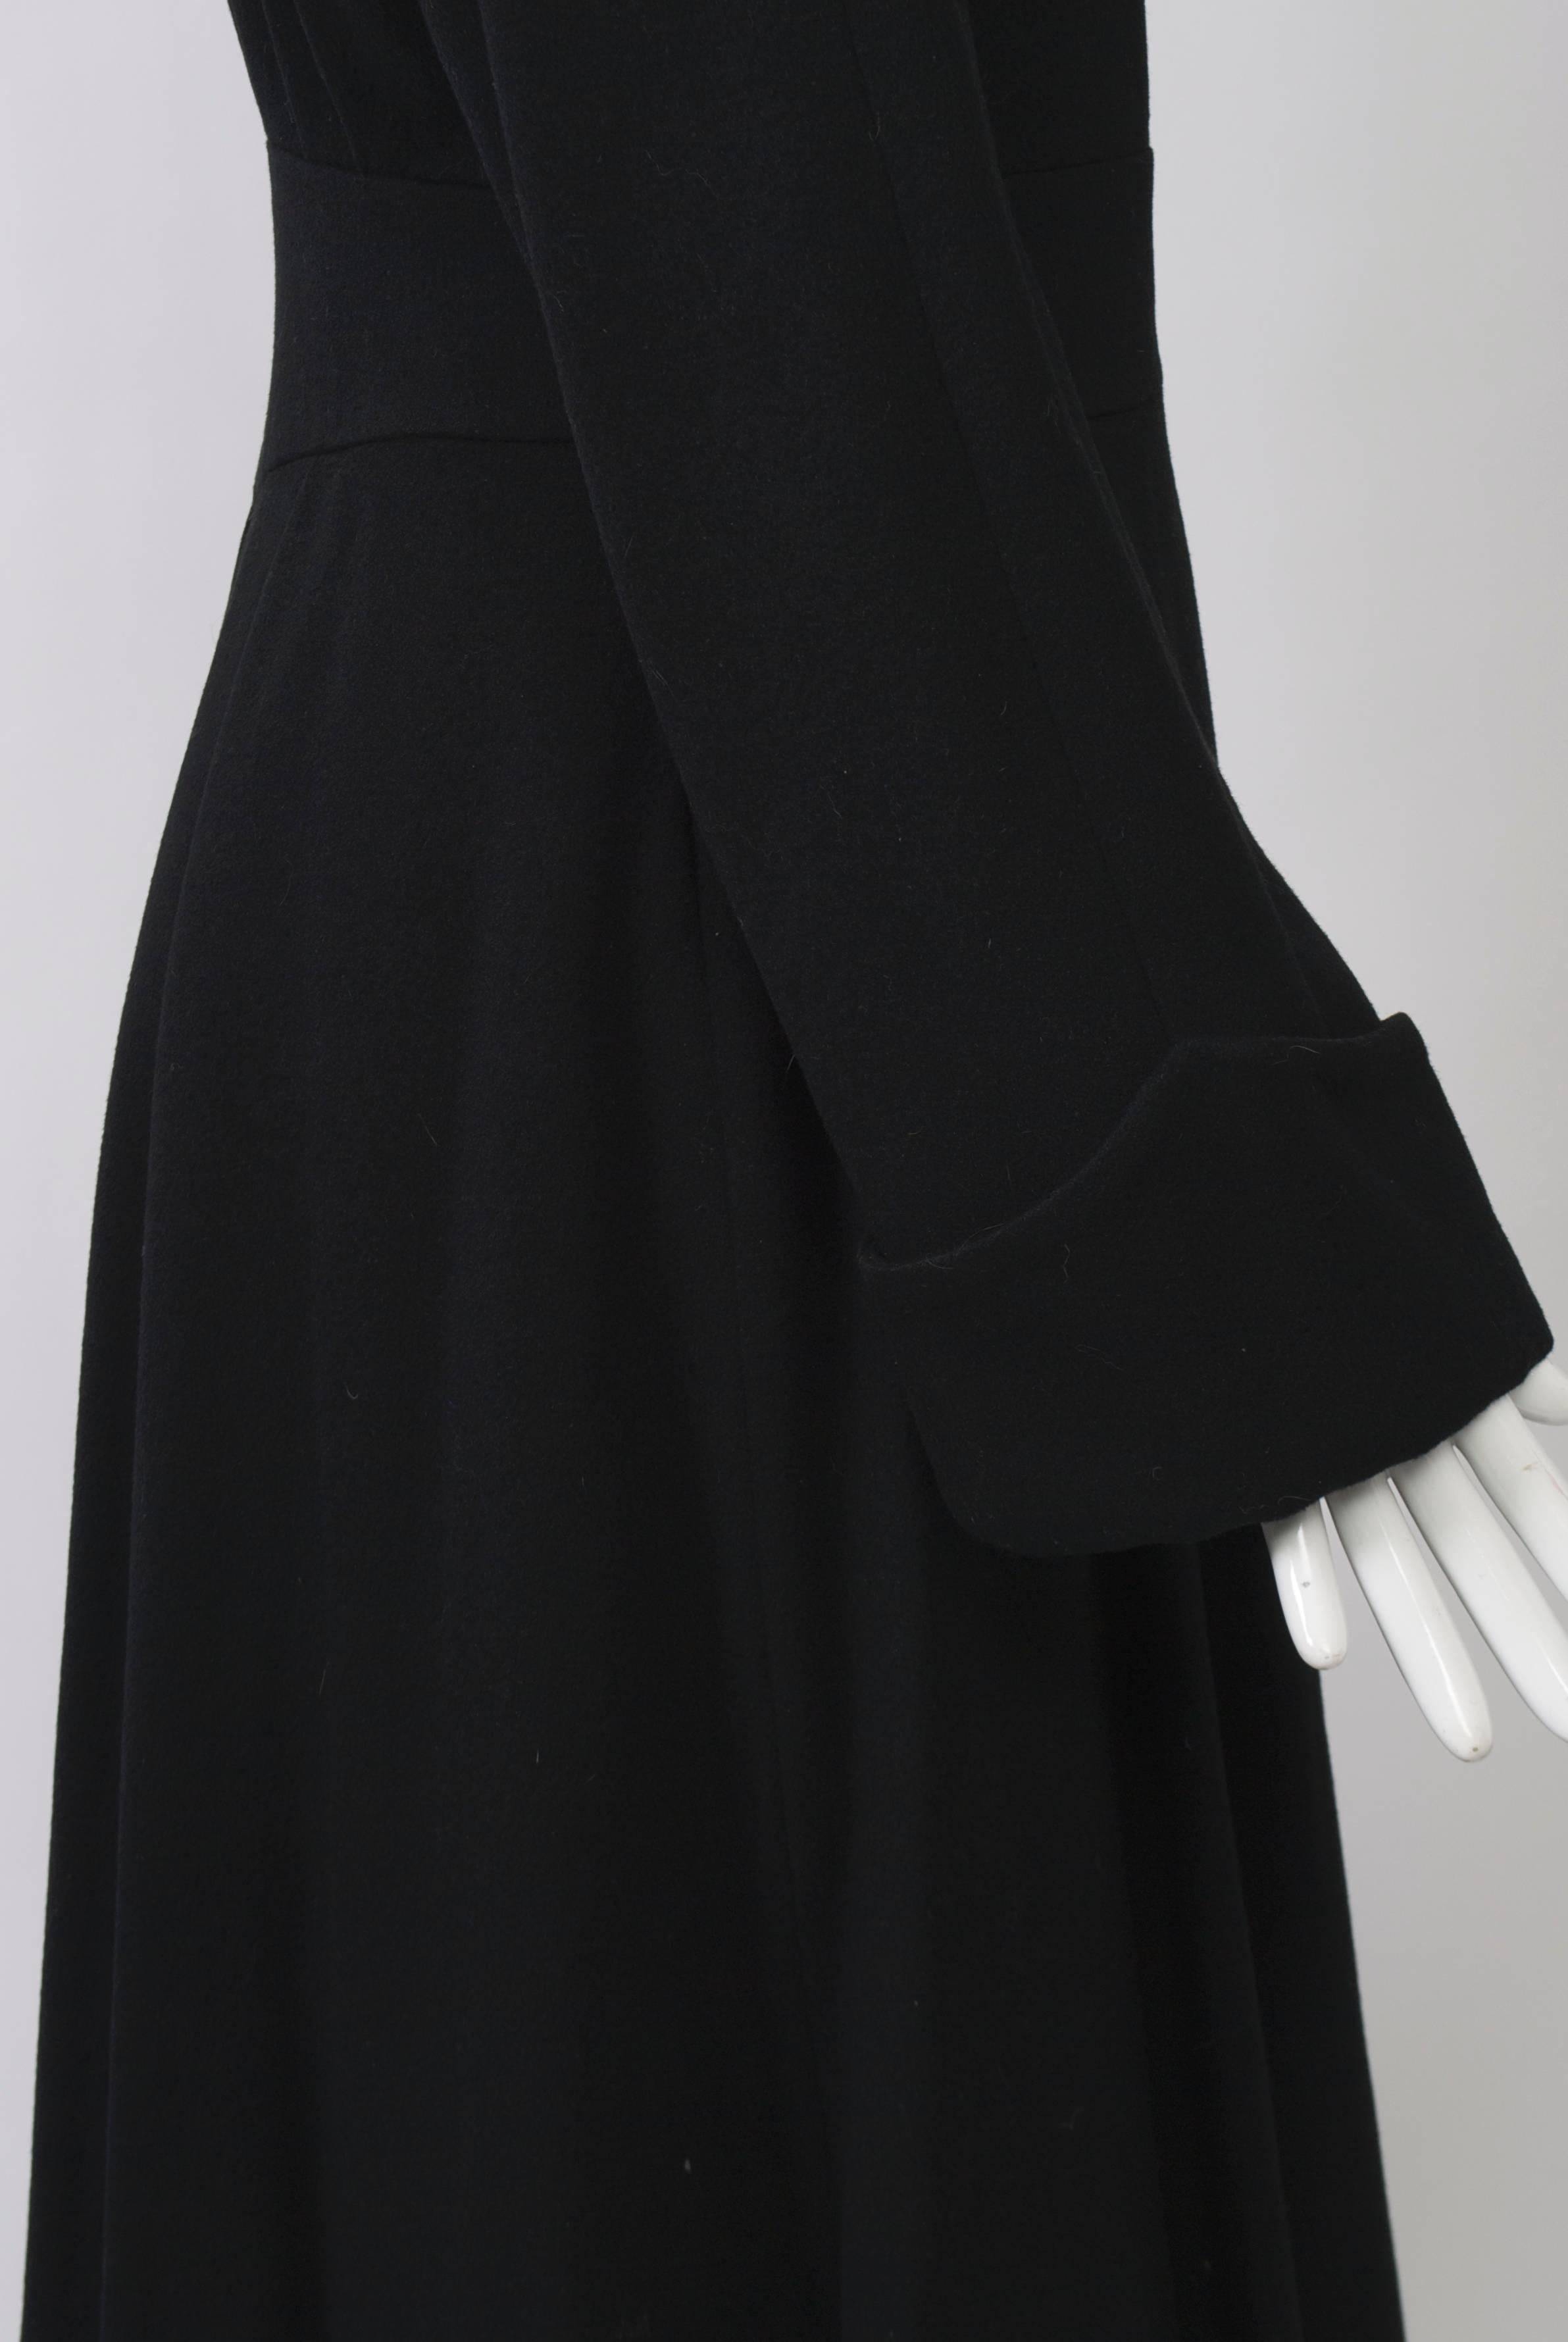 Women's or Men's 1940s Black Coat with Fur Tails